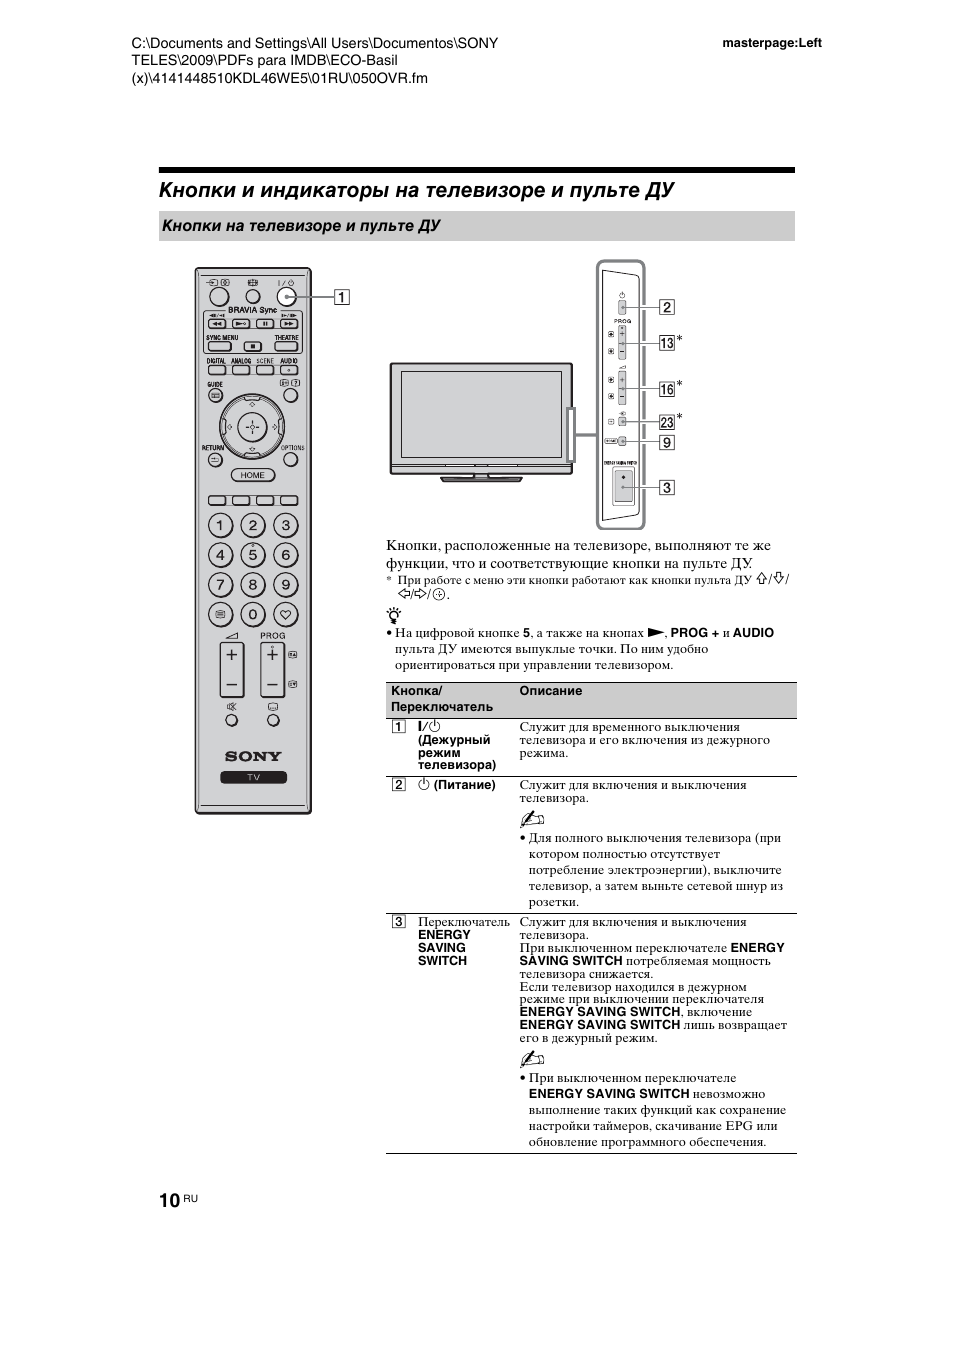 Как настроить пульт sony. Пульт телевизора сони бравиа КДЛ 32. Sony KDL-32v5500. Инструкция телевизор Sony 32w503a.